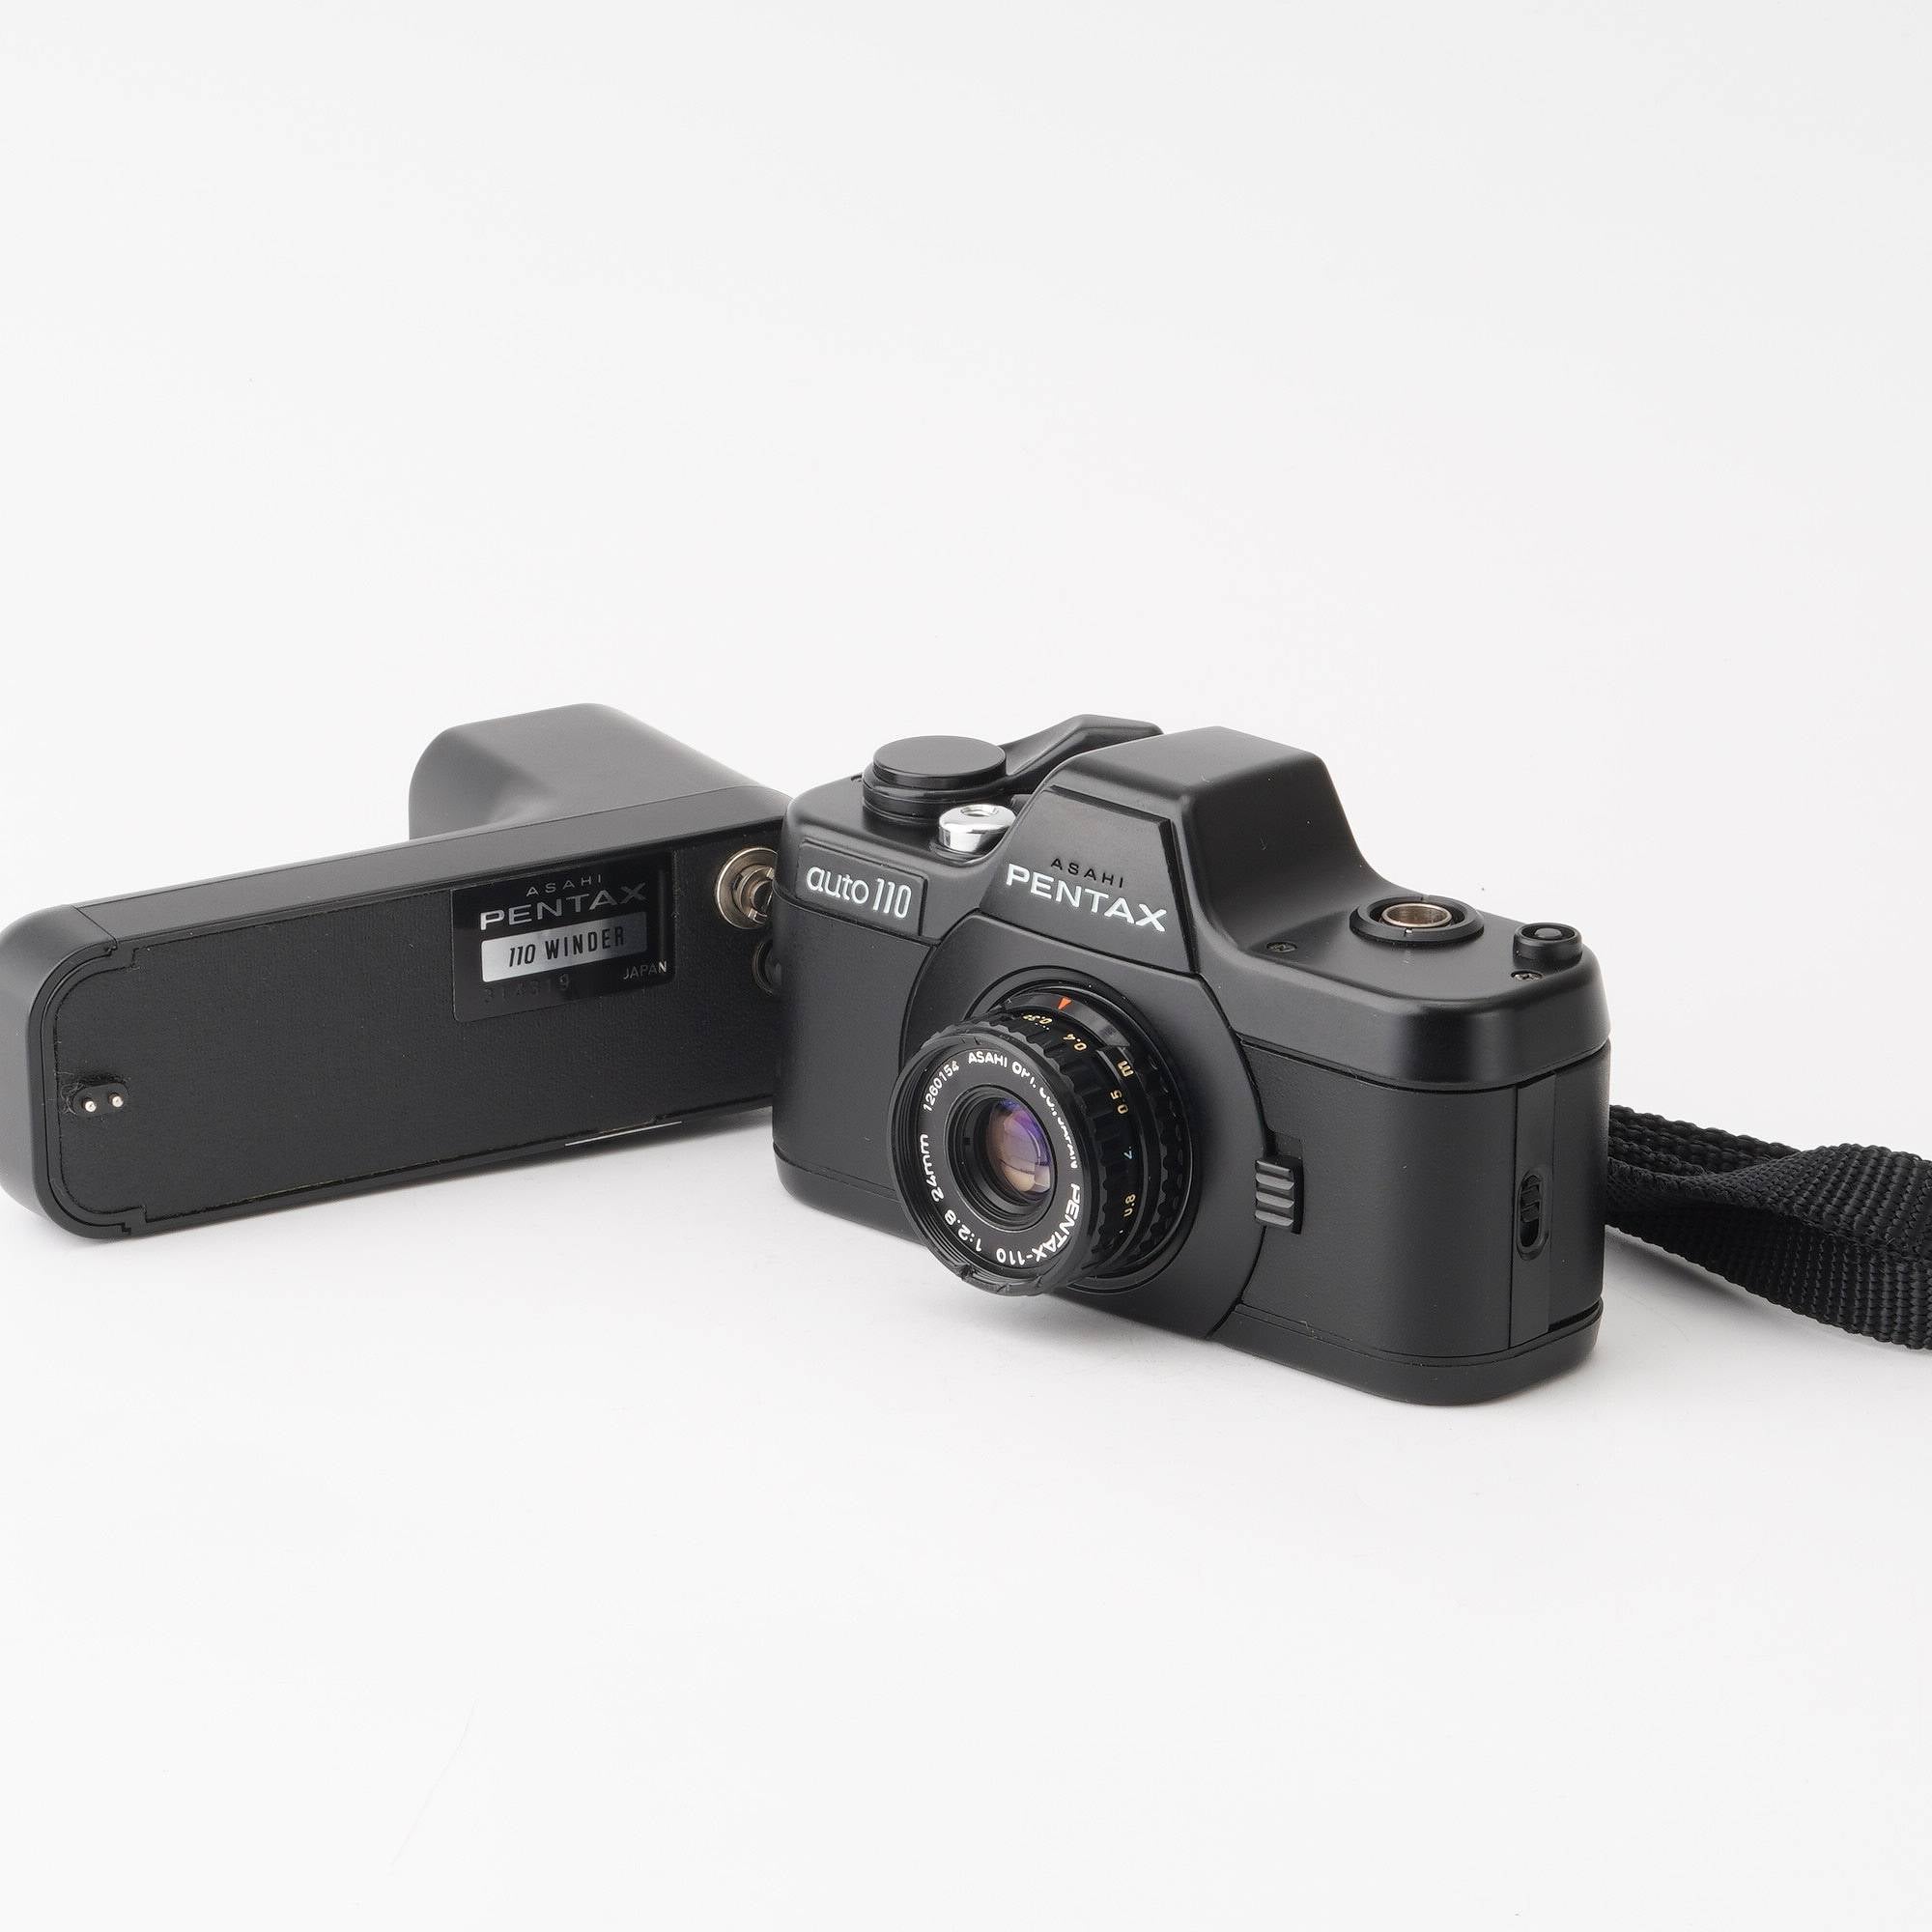 PENTAX-110 50mm f2.8 auto110用レンズ - レンズ(単焦点)